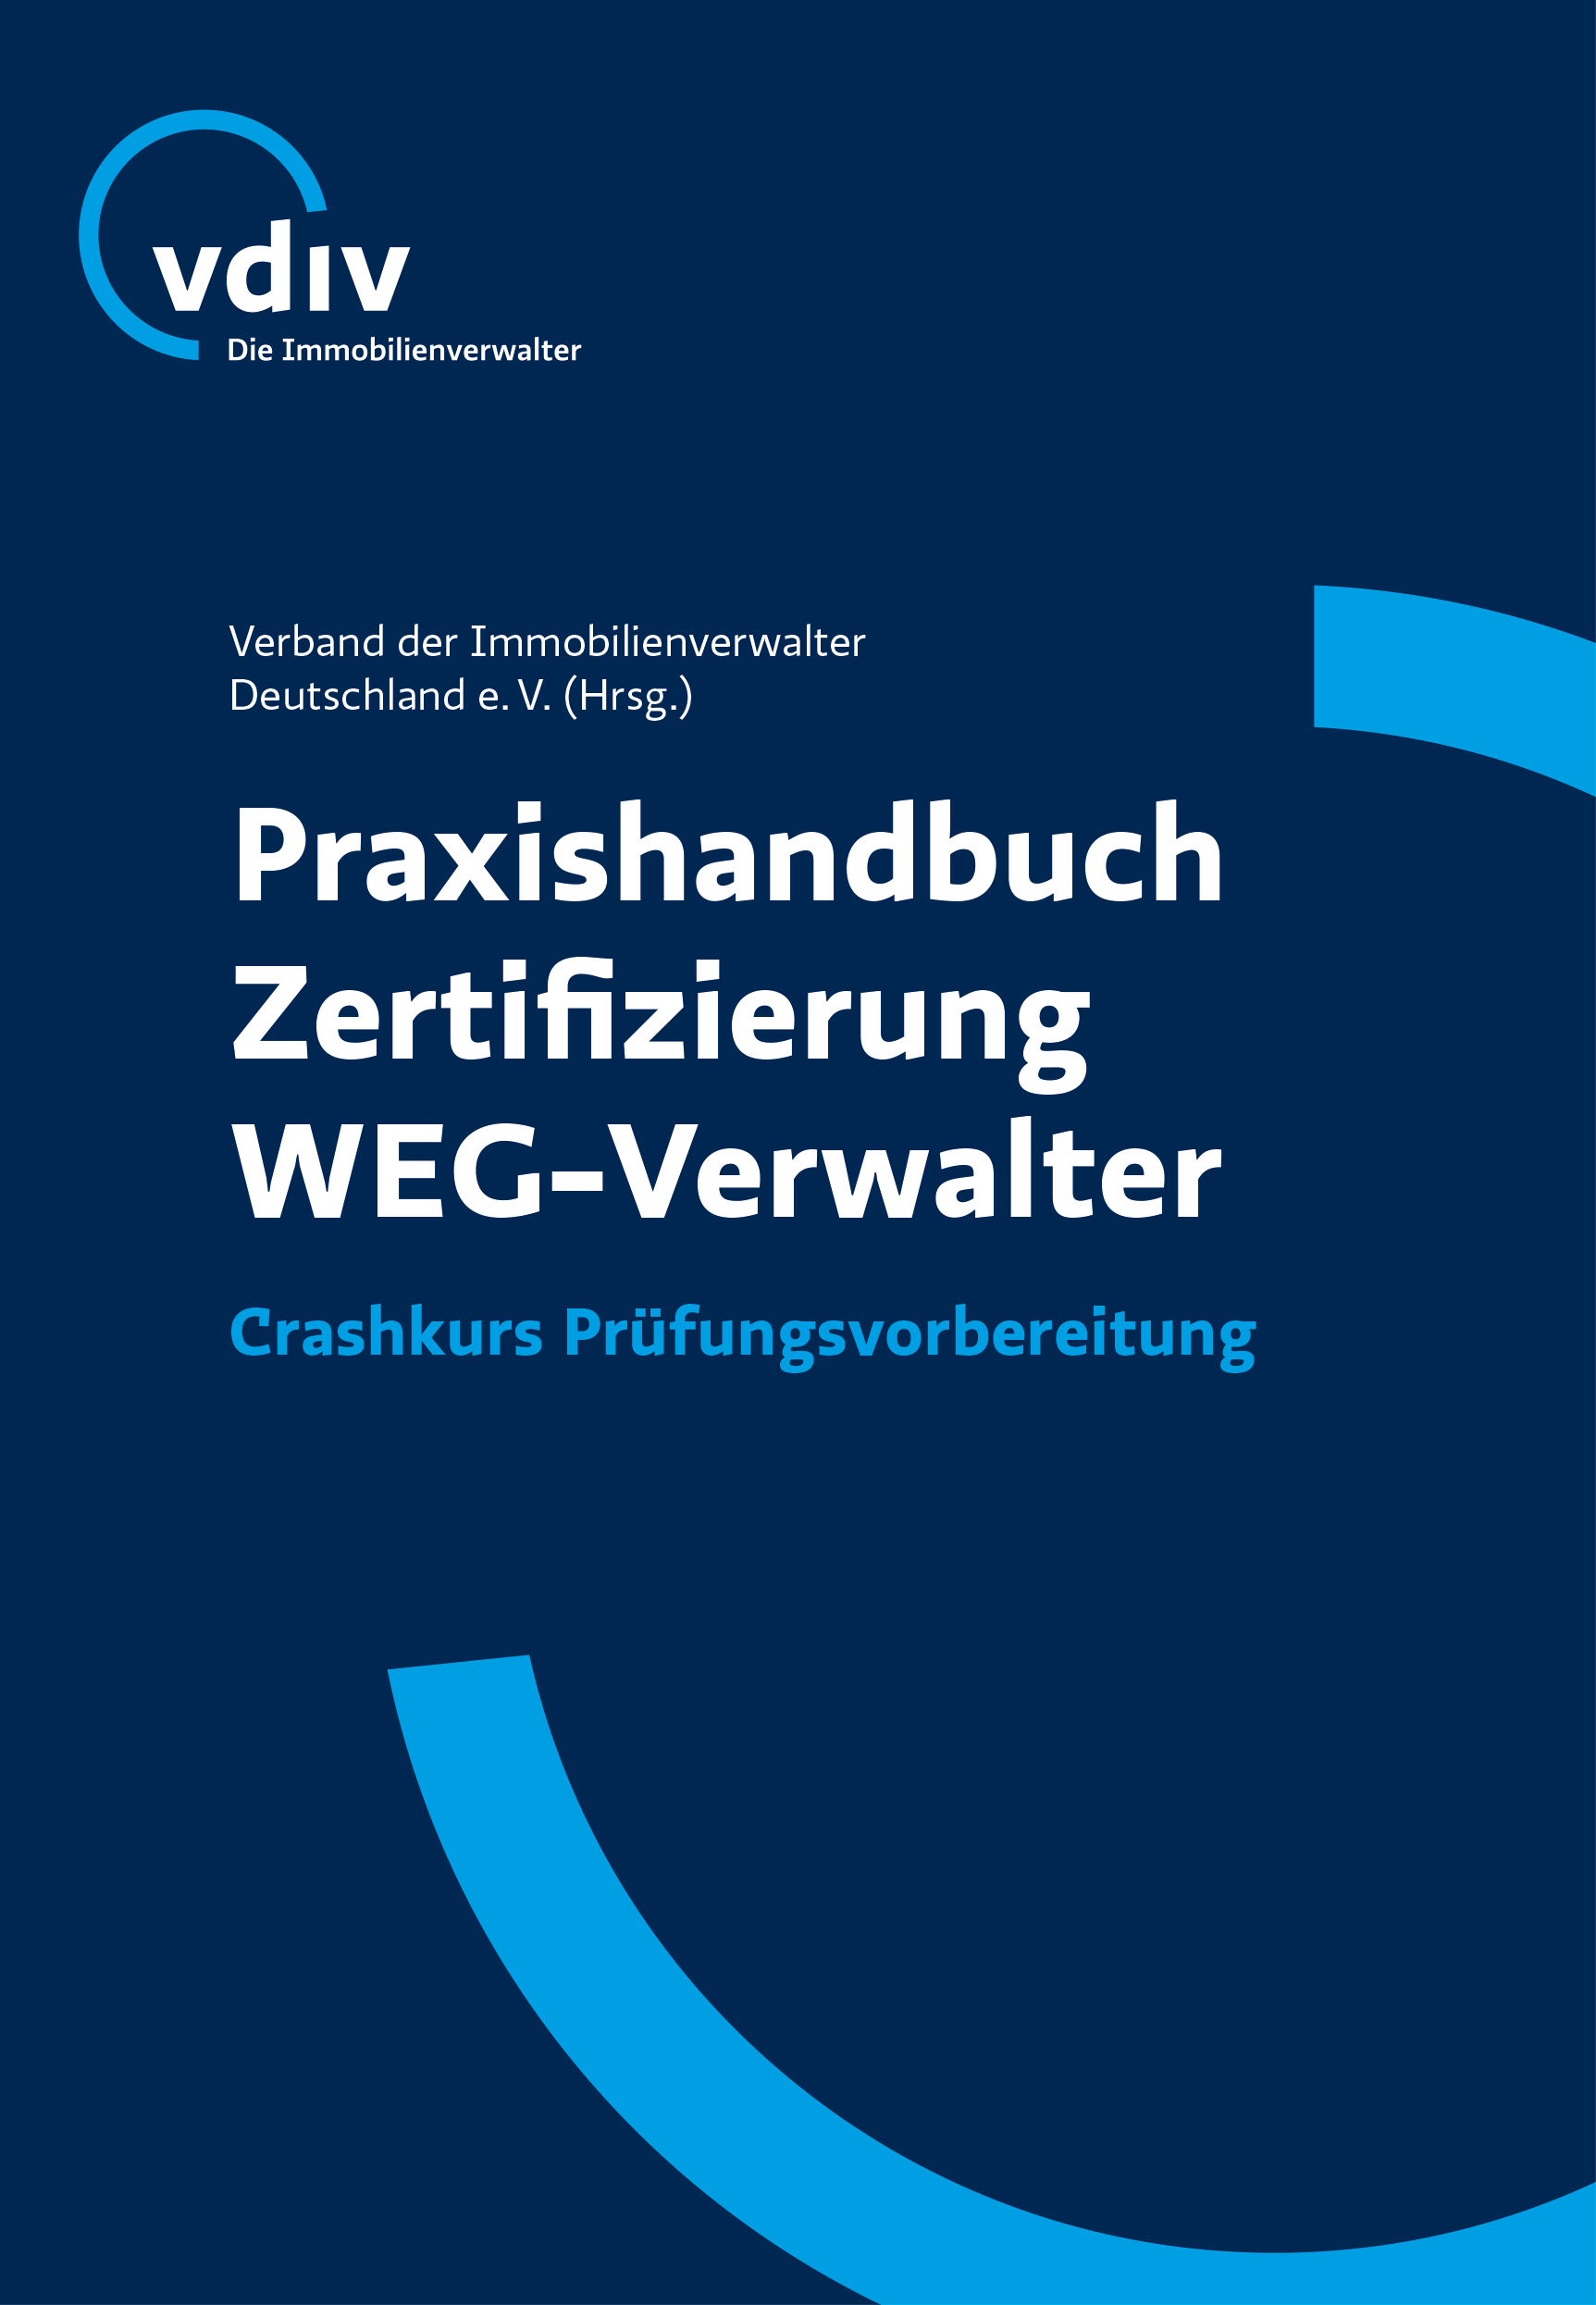 VDIV Praxishandbuch Zertifizierung: Crashkurs zum zertifizierten Verwalter